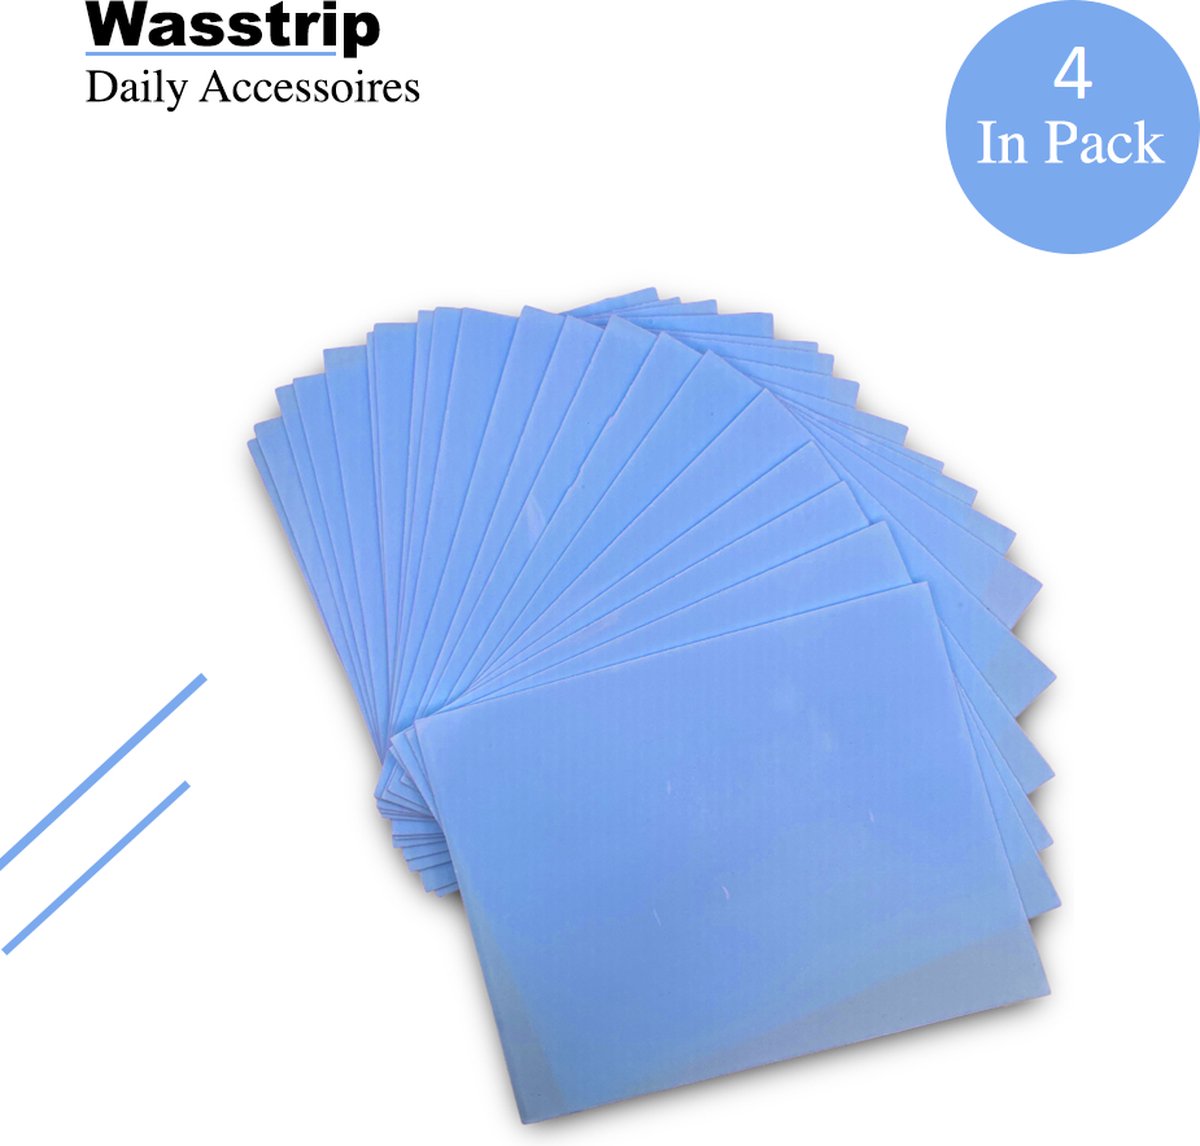 Wasstrips Proefpakket - wasstrips - wasmiddel strips - wasvellen - eco wasmiddel - laundry detergent - 4 wasbeurten - Biologisch afbreekbaar